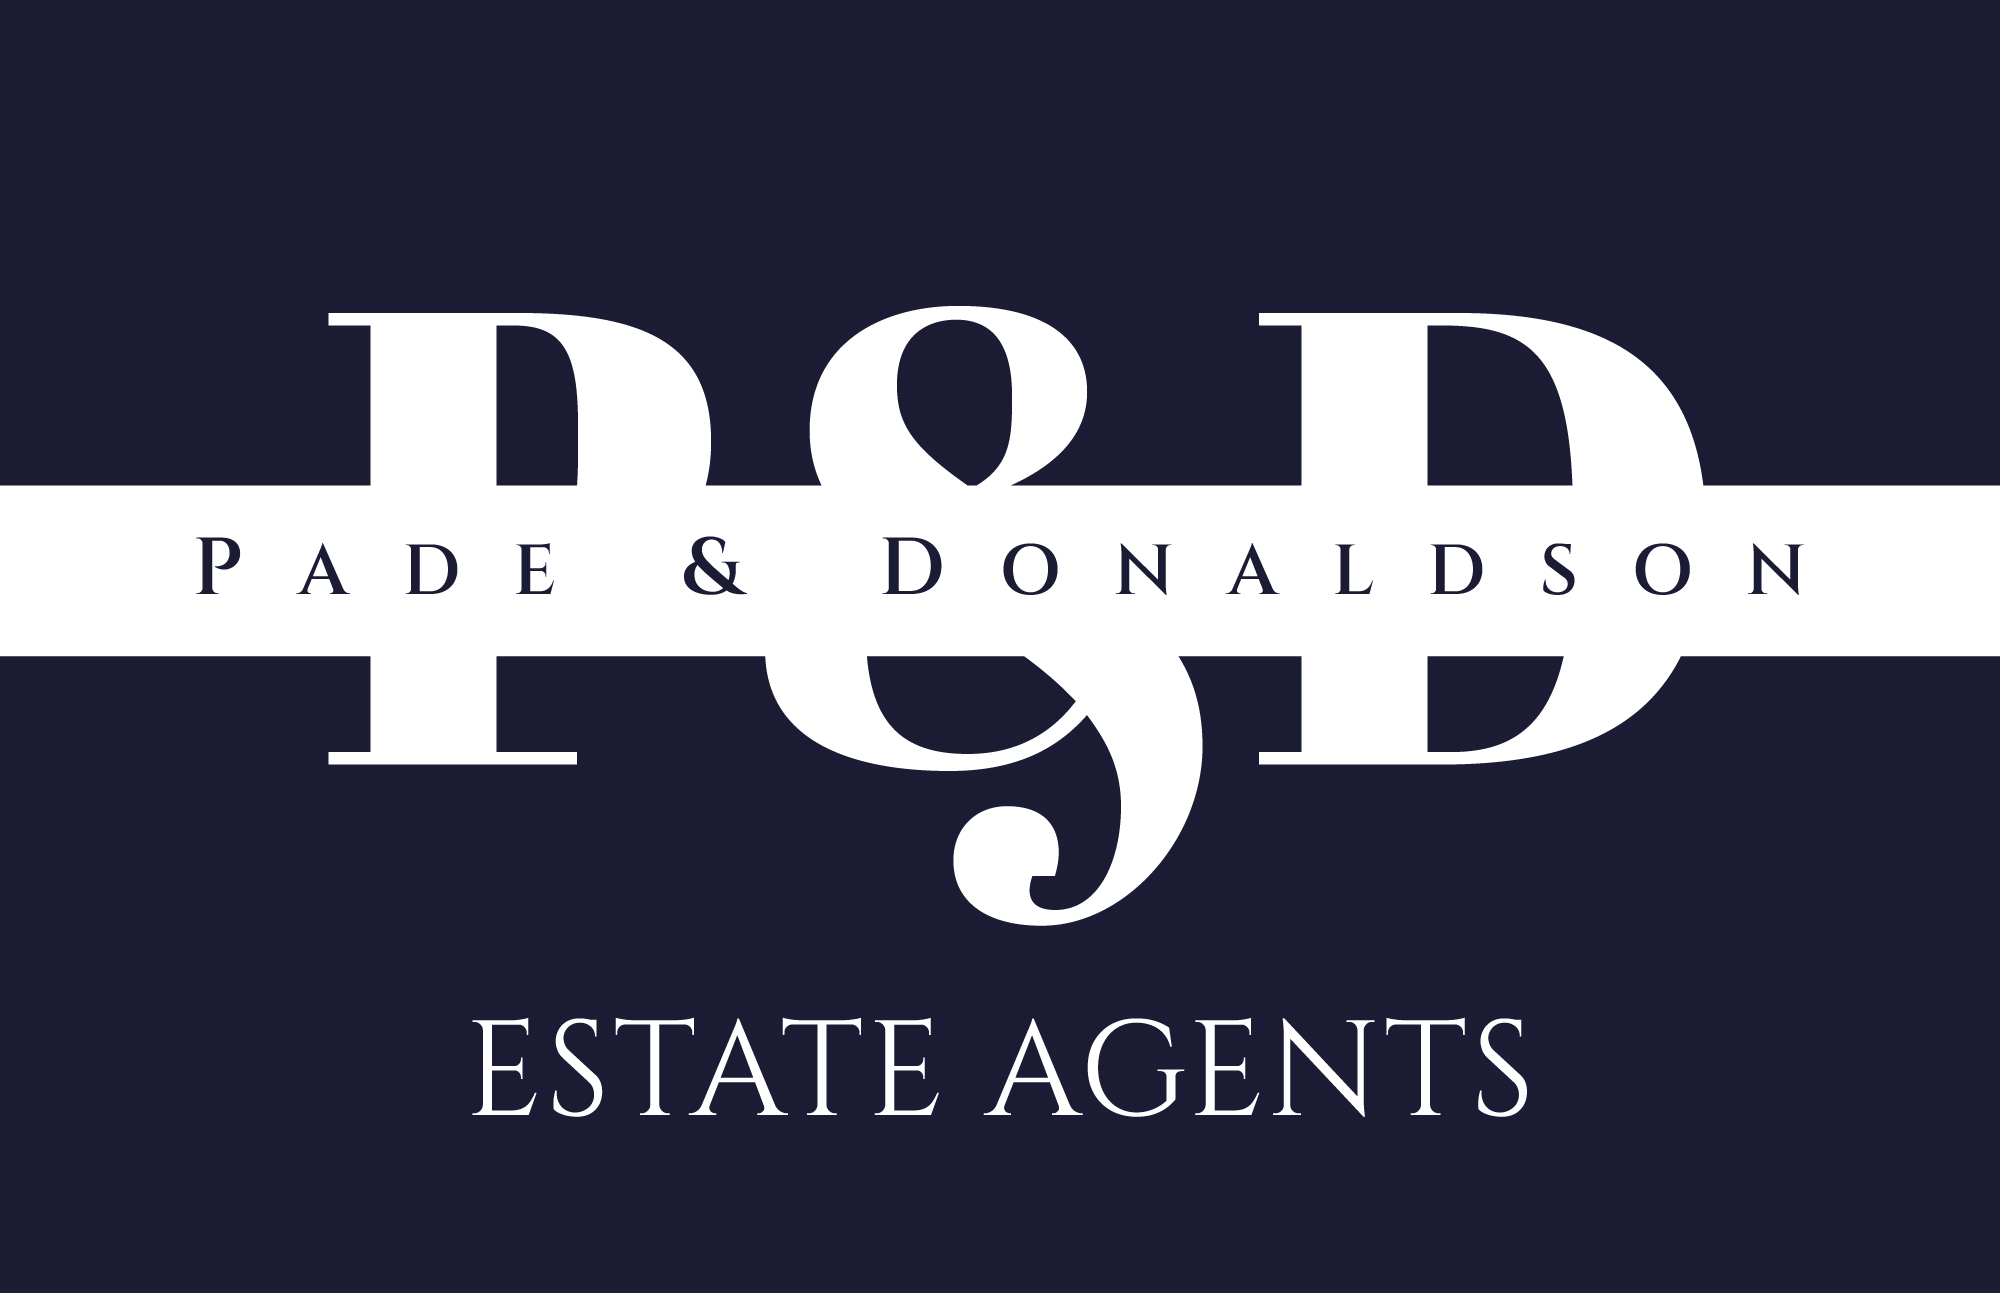 Pade & Donaldson Estate Agents - 